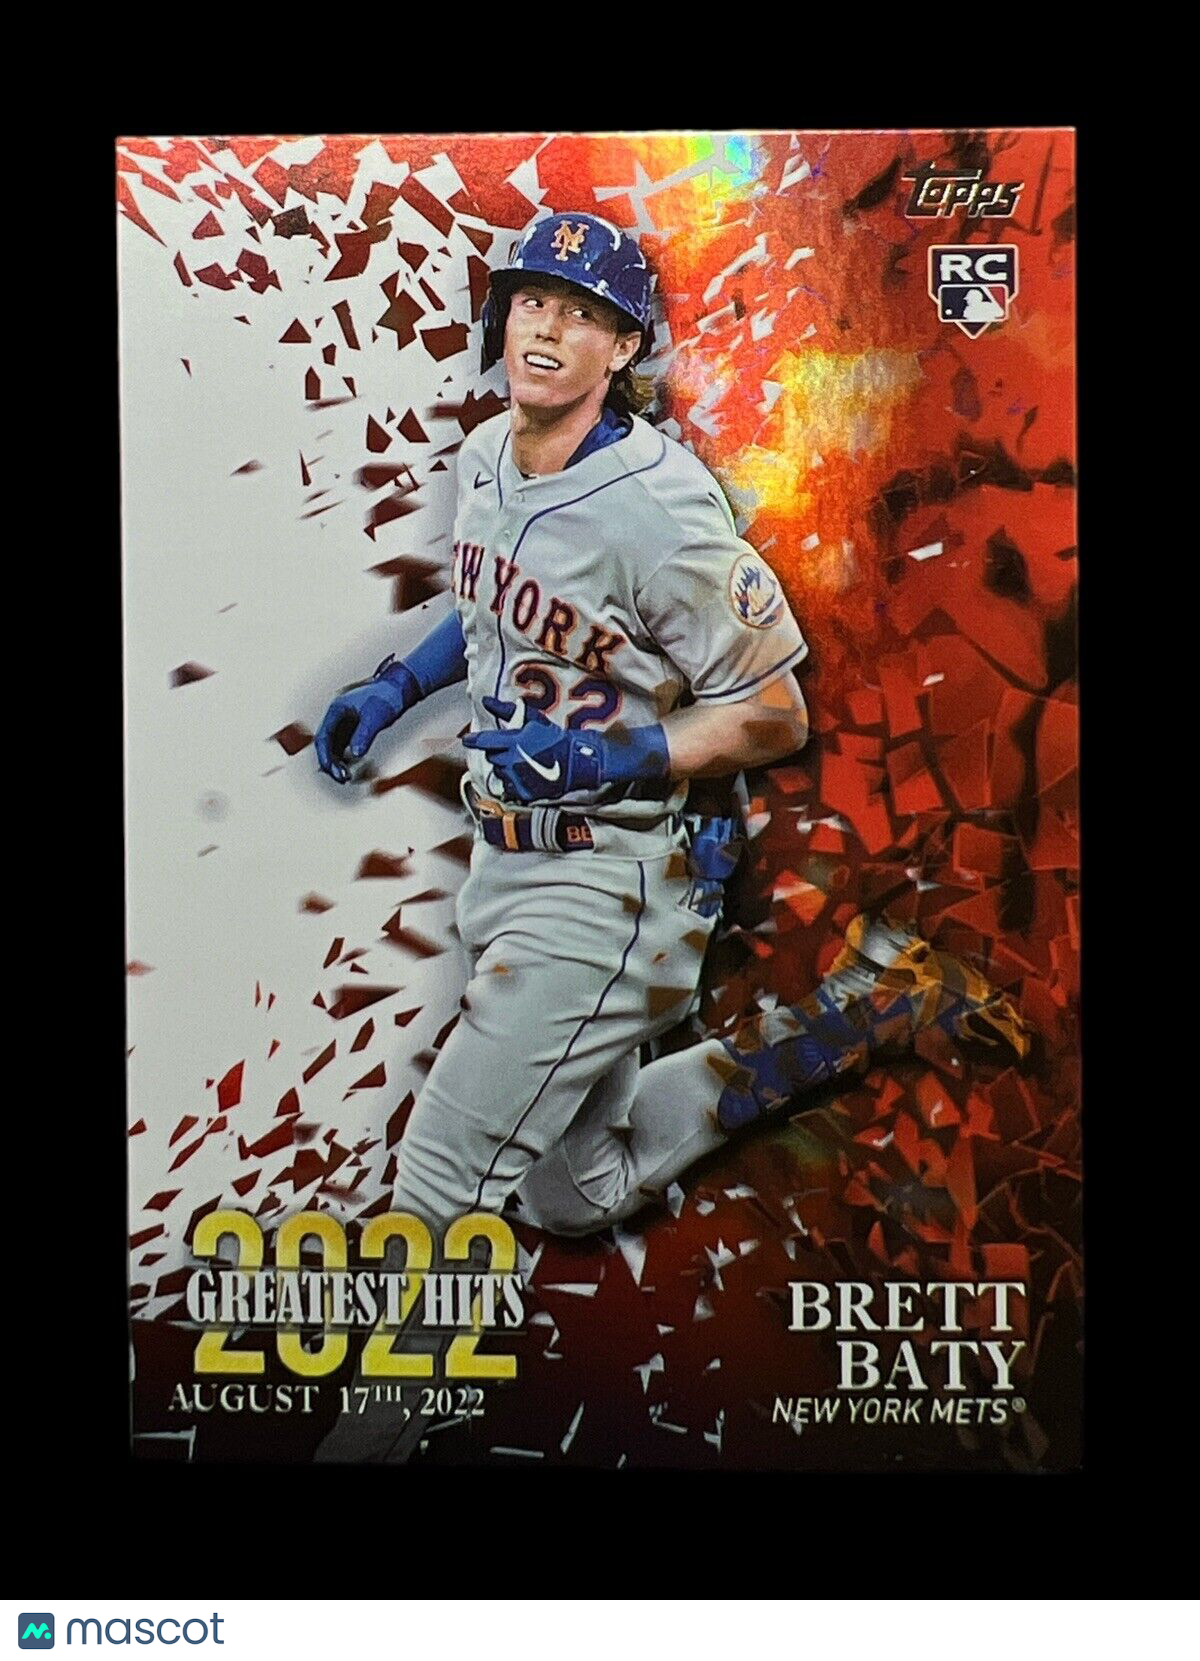 2023 Topps Series 1 Baseball Brett Baty 2022 Greatest Hits HOLO FOIL RC # 22GH-3